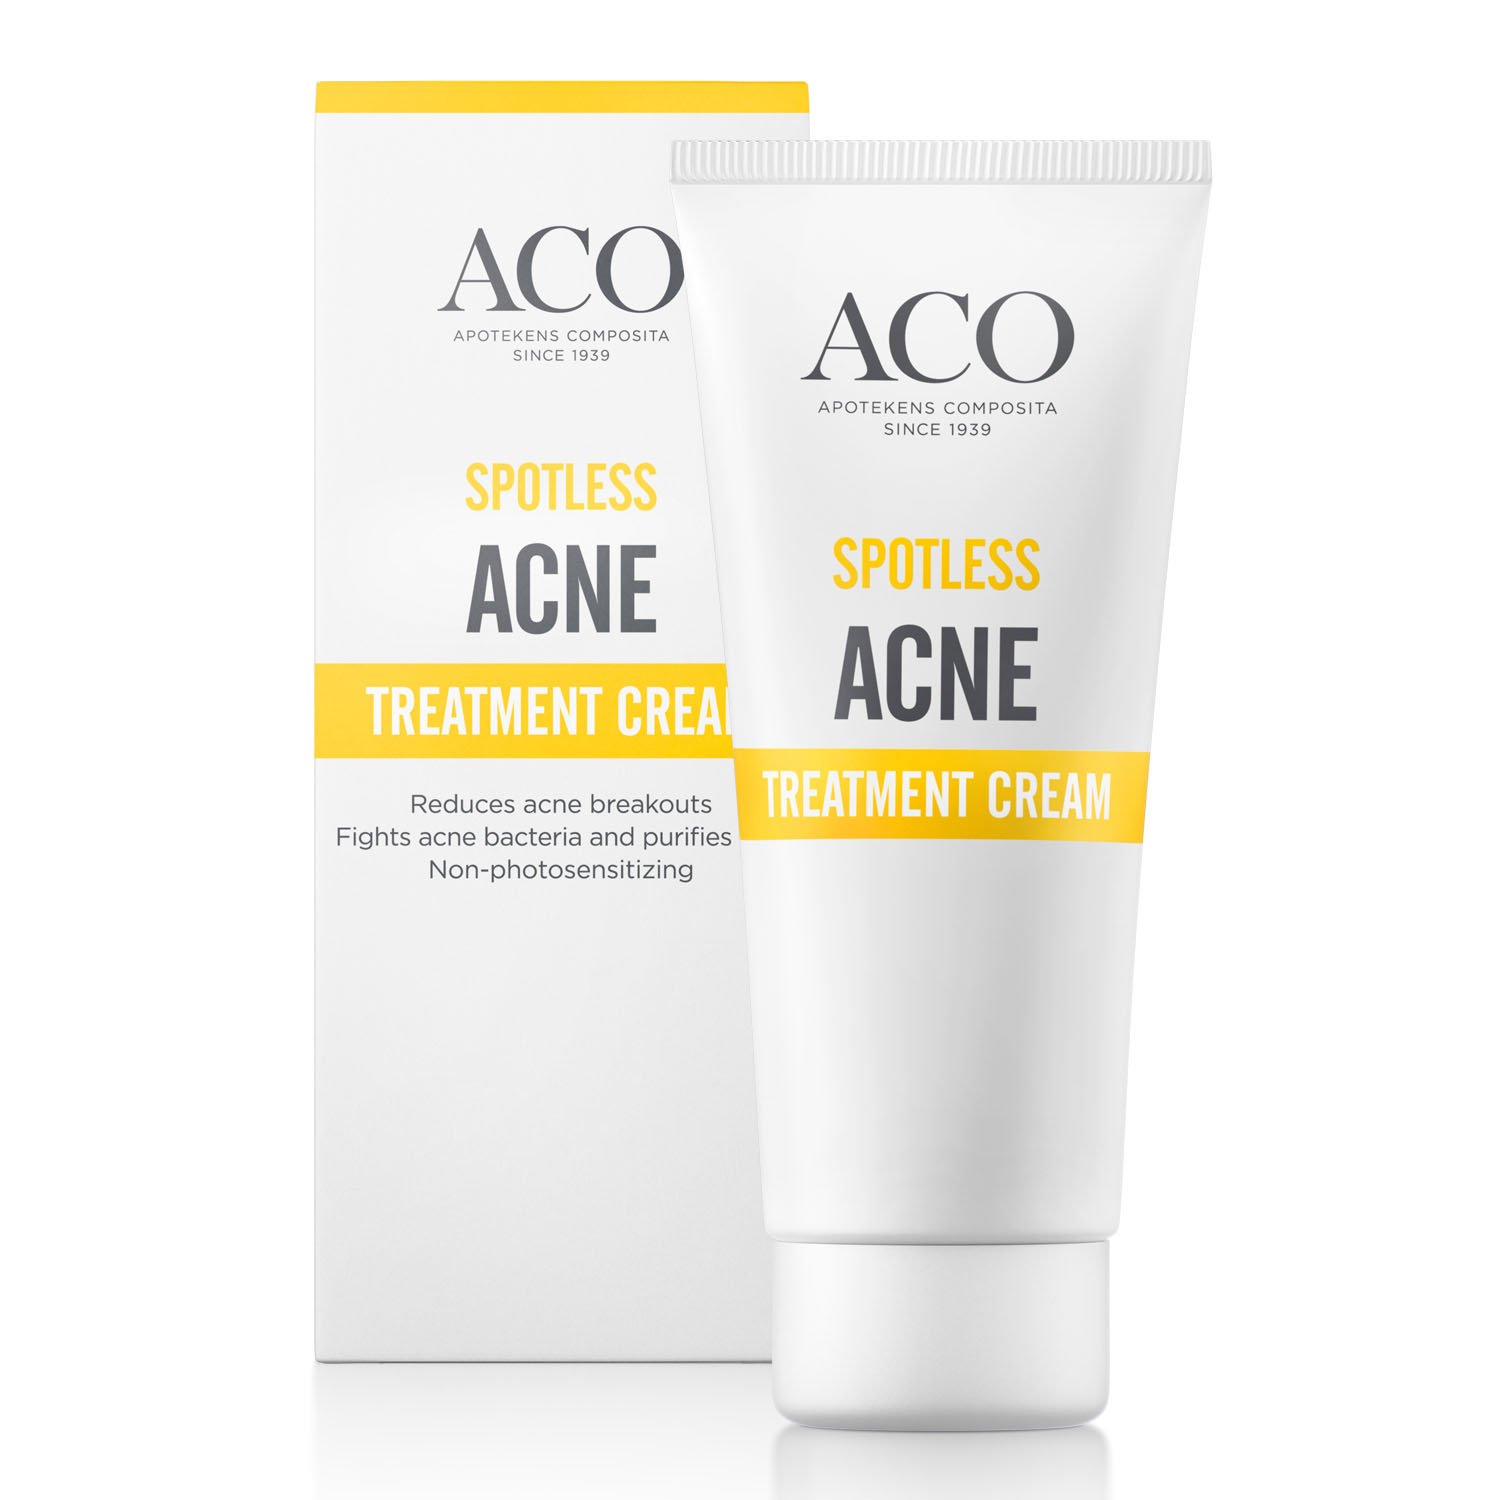 ACO Spotless Acne Skin Treatment Cream, 30 g